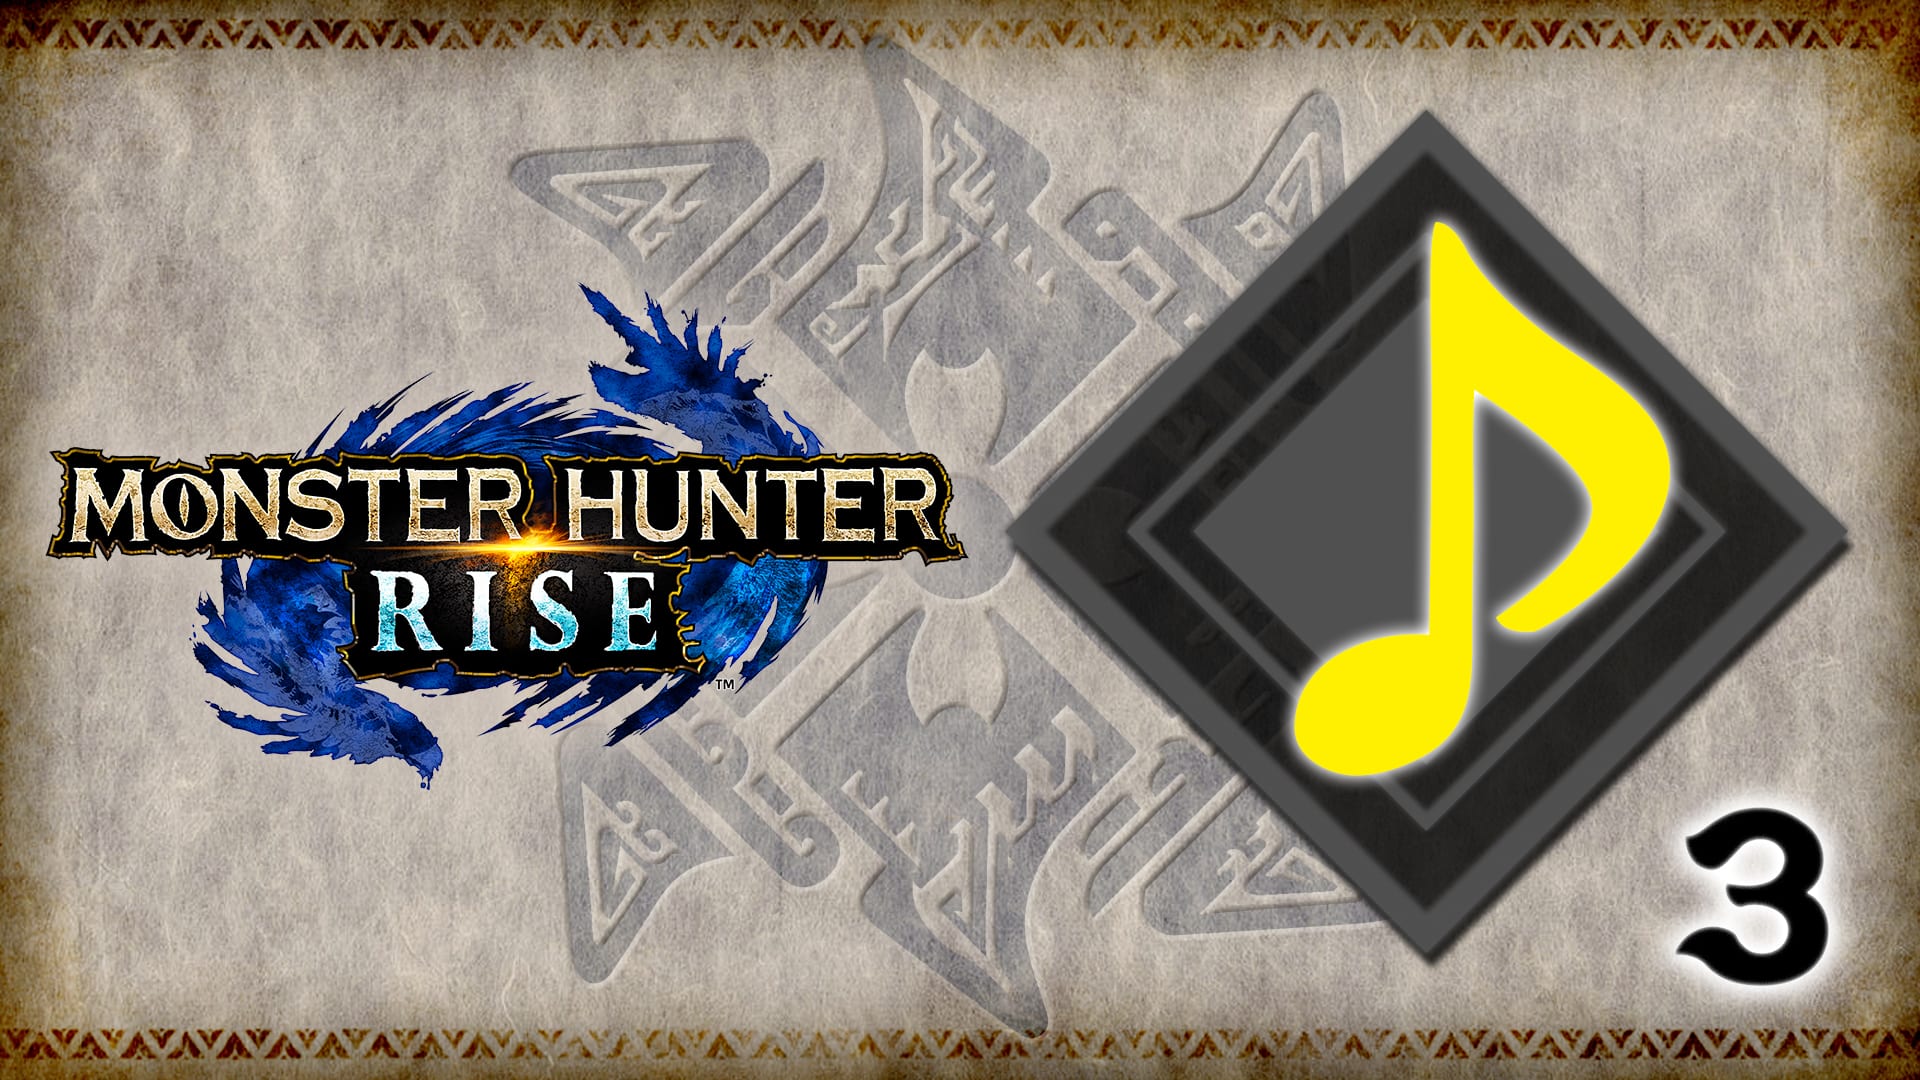 Música de fundo "Monster Hunter Series Bases"